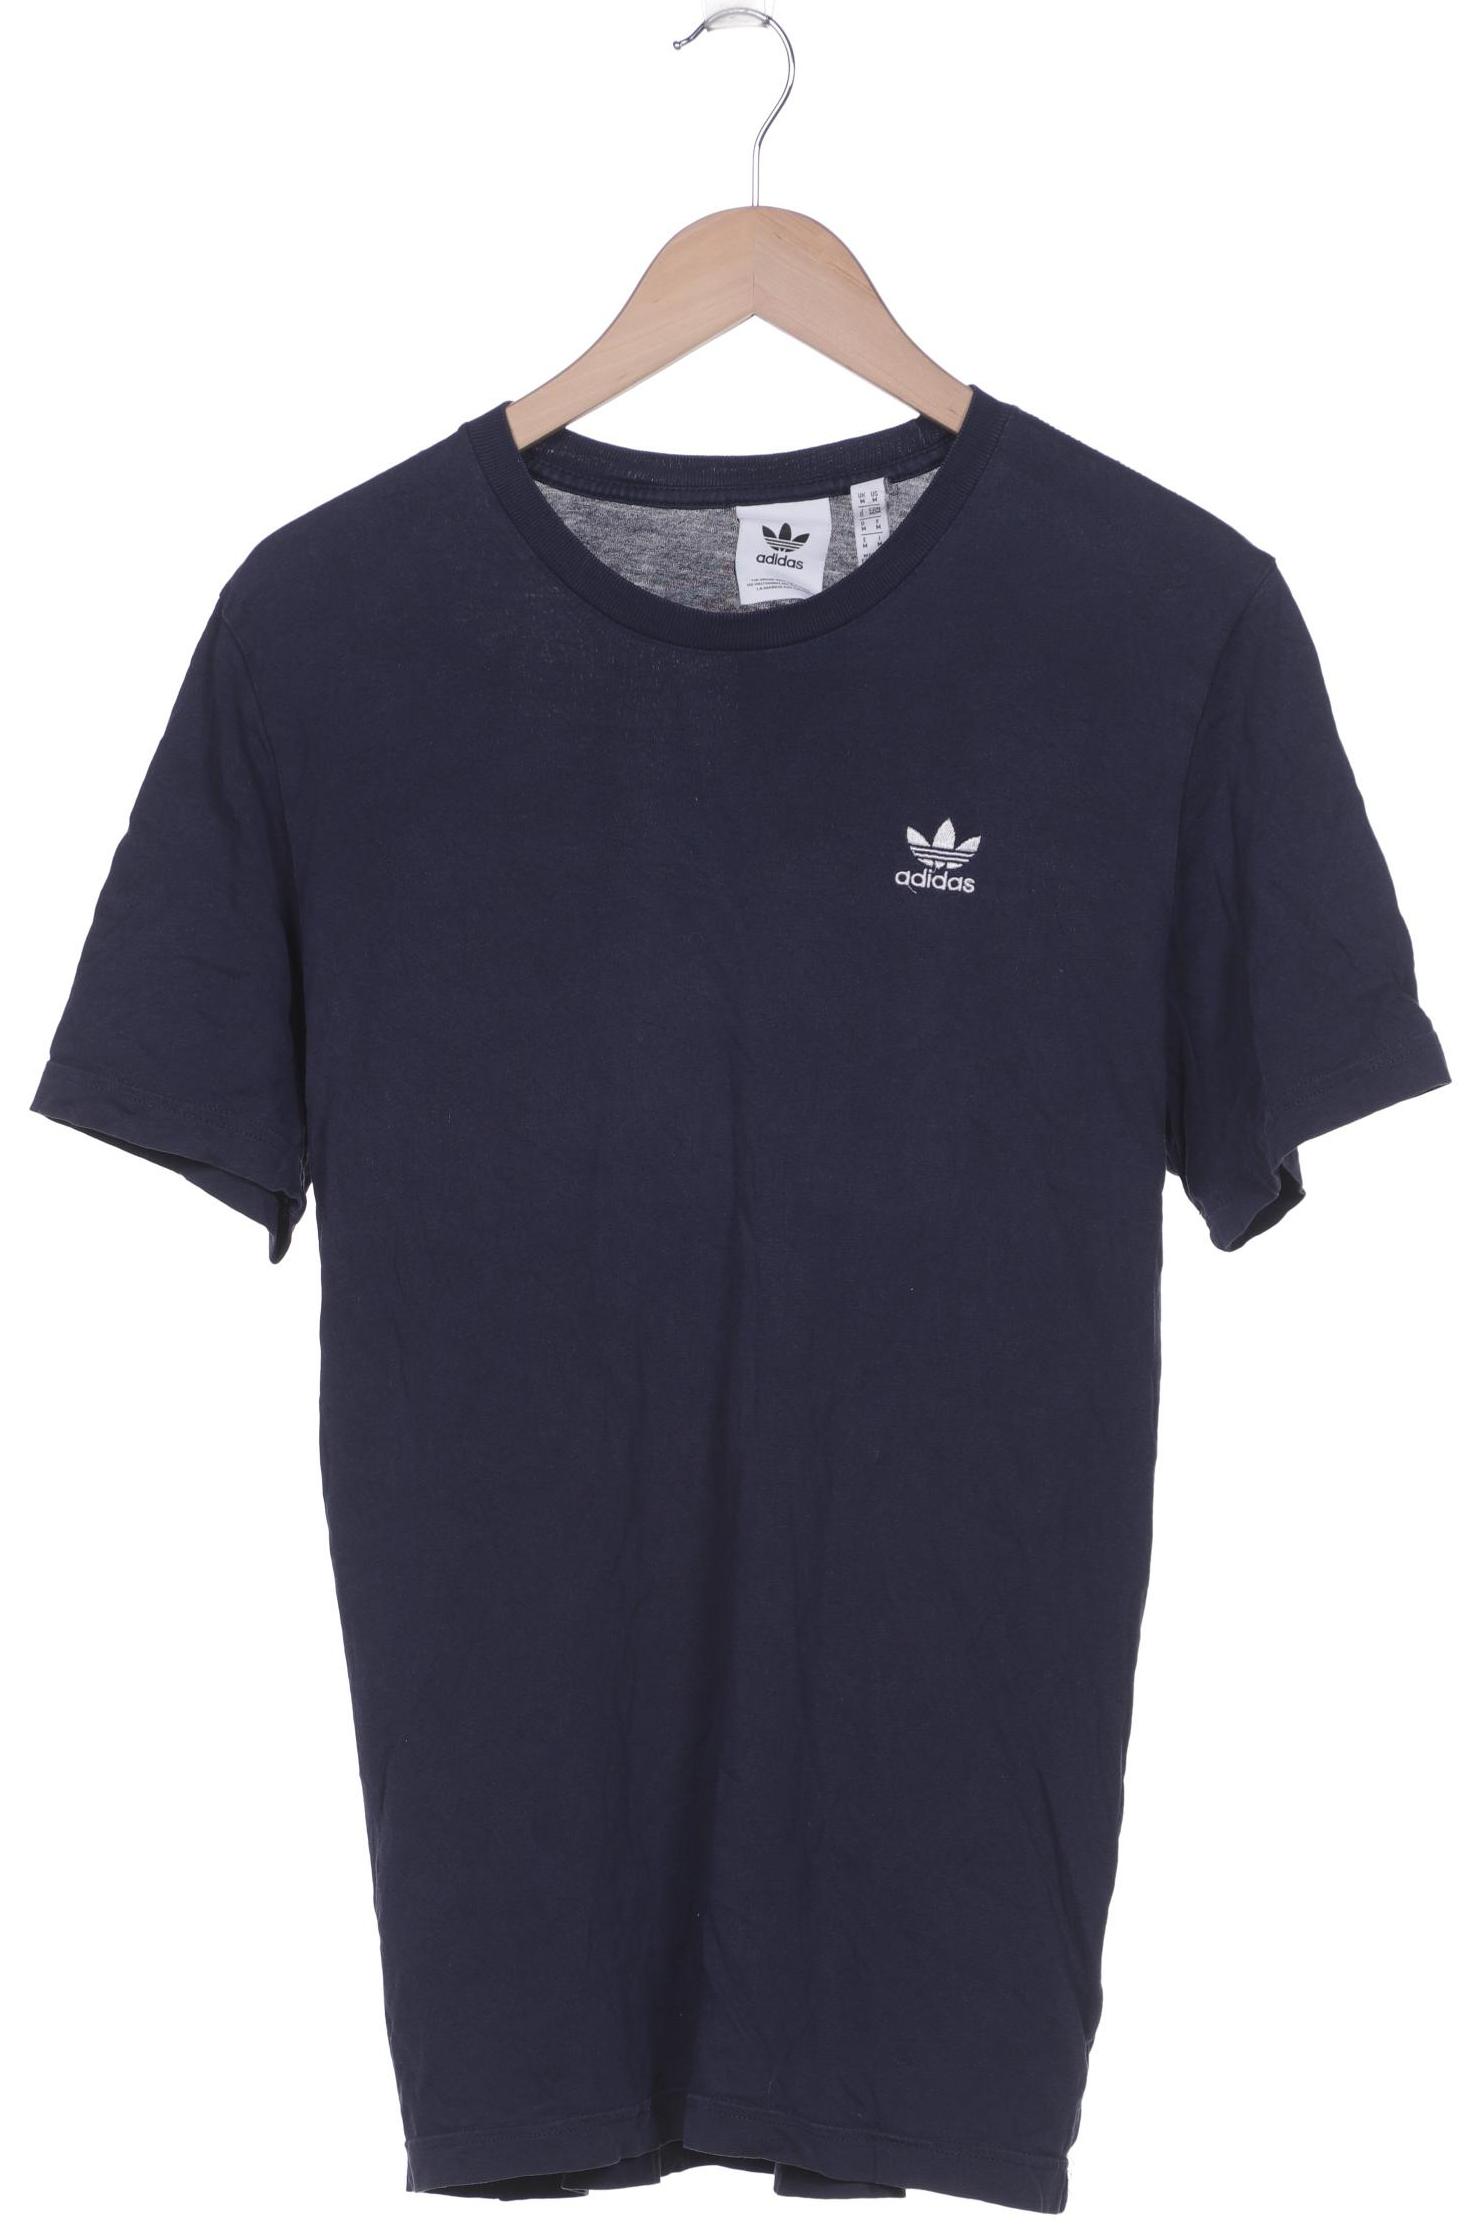 adidas Originals Herren T-Shirt, marineblau, Gr. 48 von adidas Originals